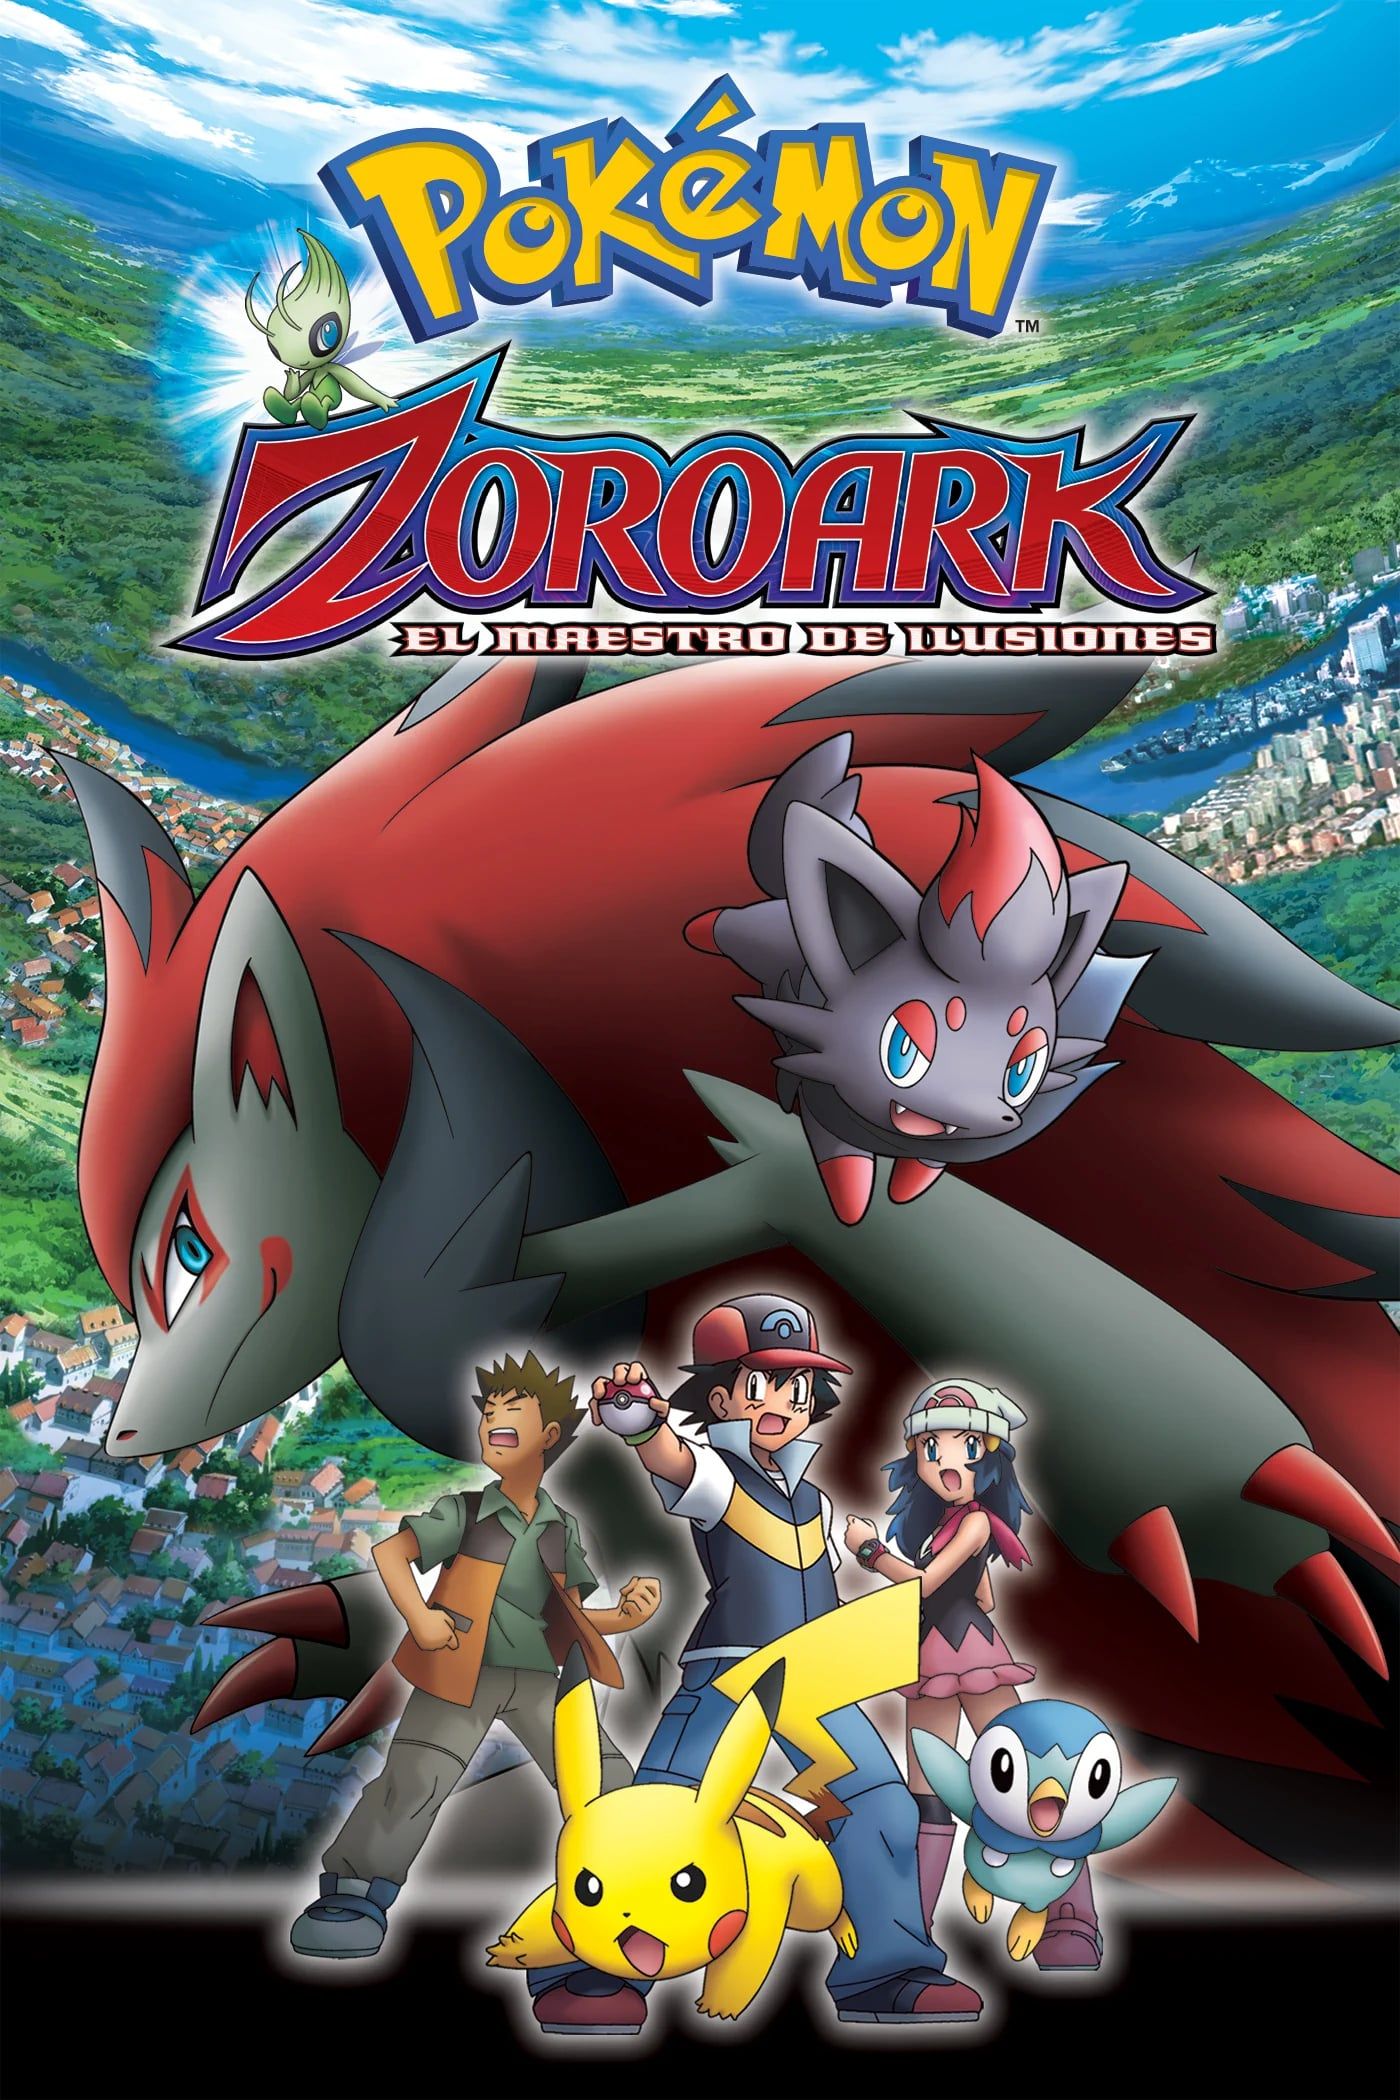 Pokemon: Zoroark: Master of Illusions (Dub)